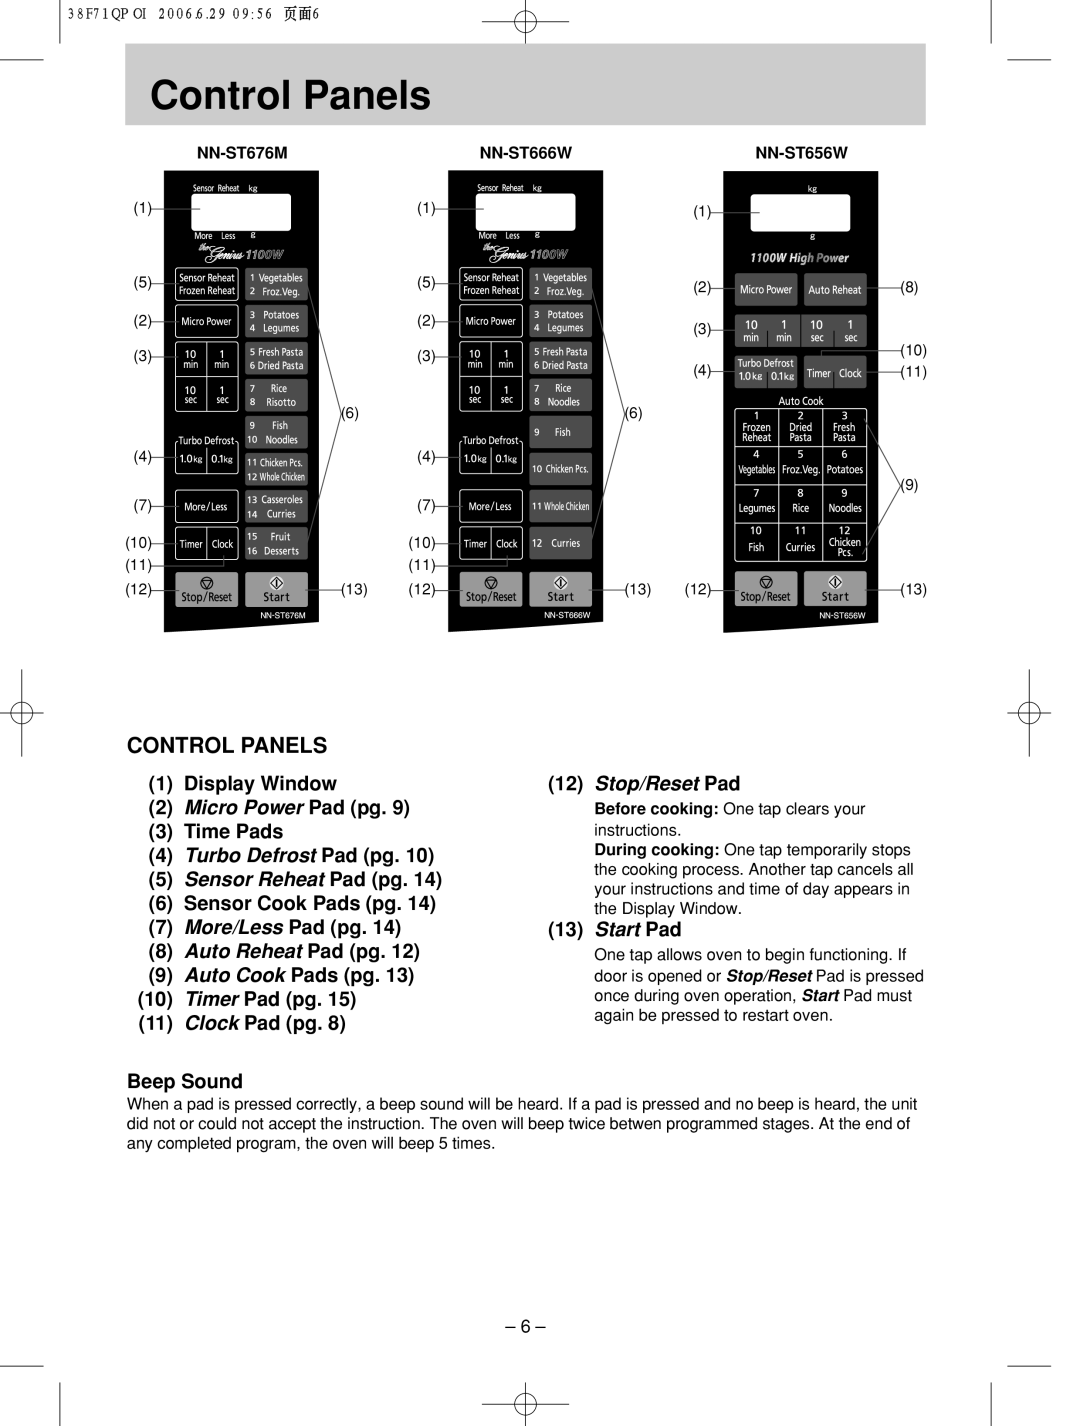 Panasonic NN-ST656W manual Control!!!!!!!! Panels, Control Panels, 1Display Window, 3Time Pads, 11Clock Pad pg. Beep Sound 